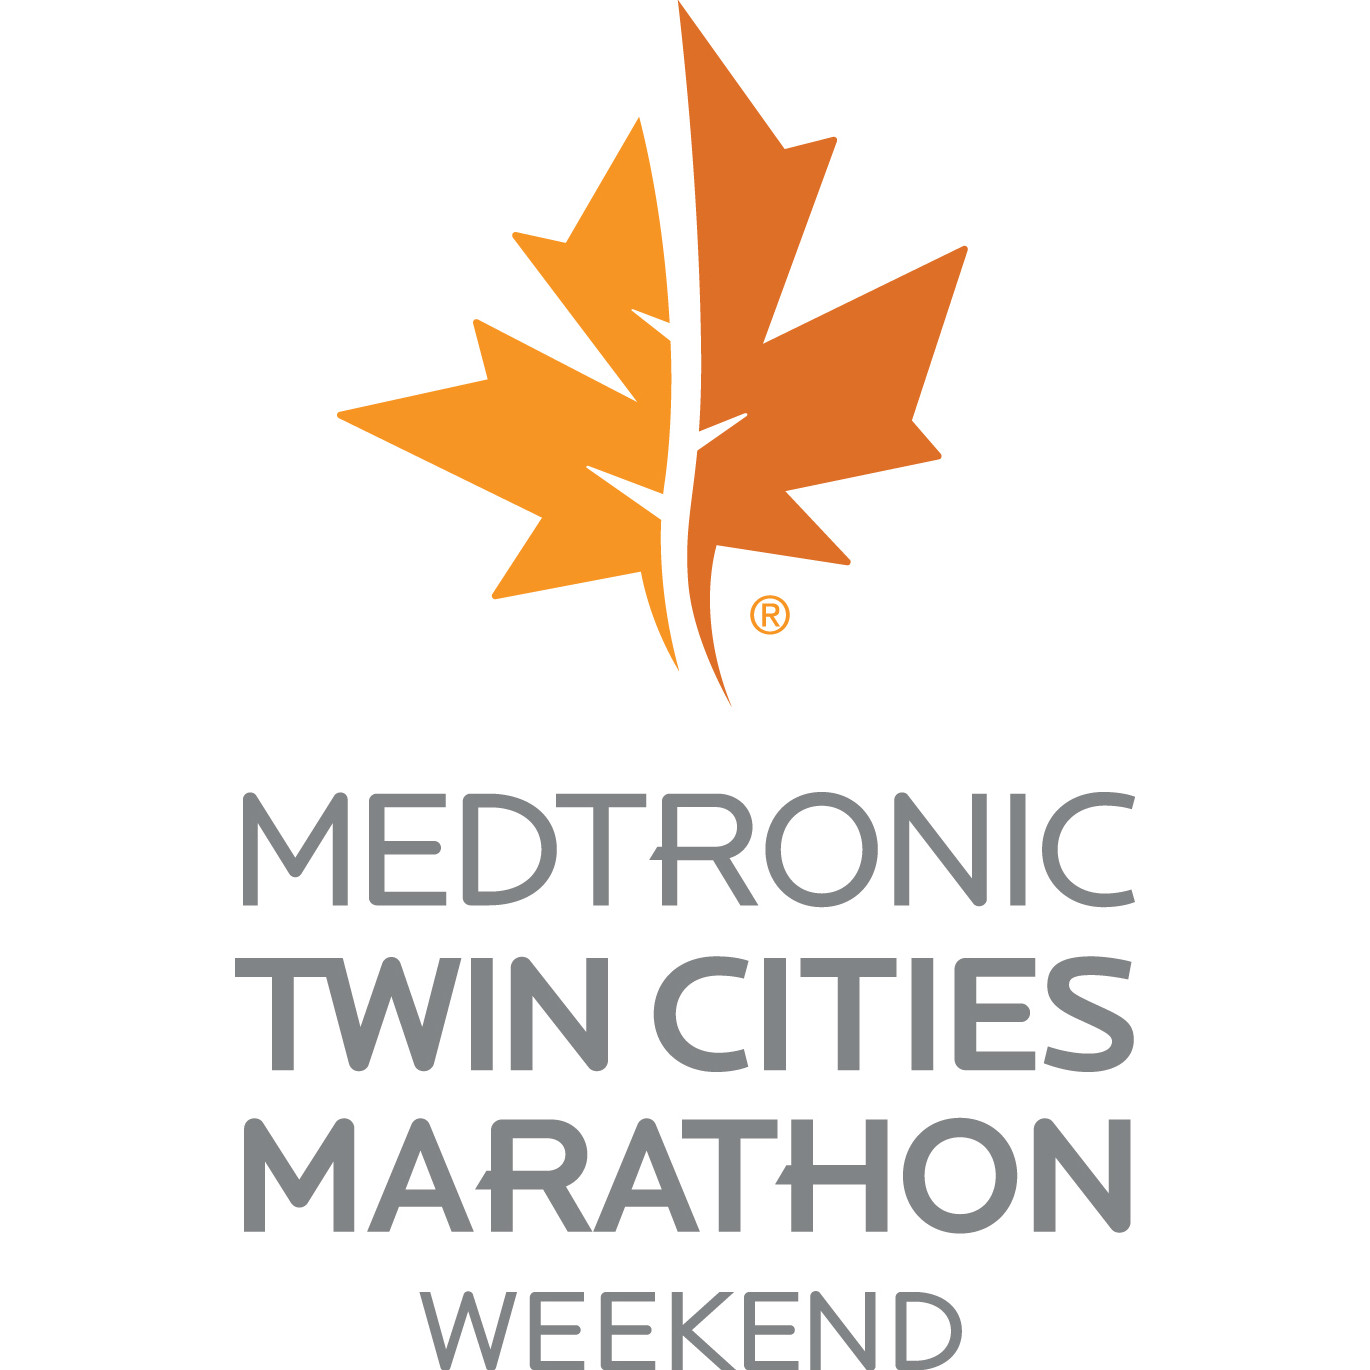 Medtronic Twin Cities Marathon Weekend logo on RaceRaves